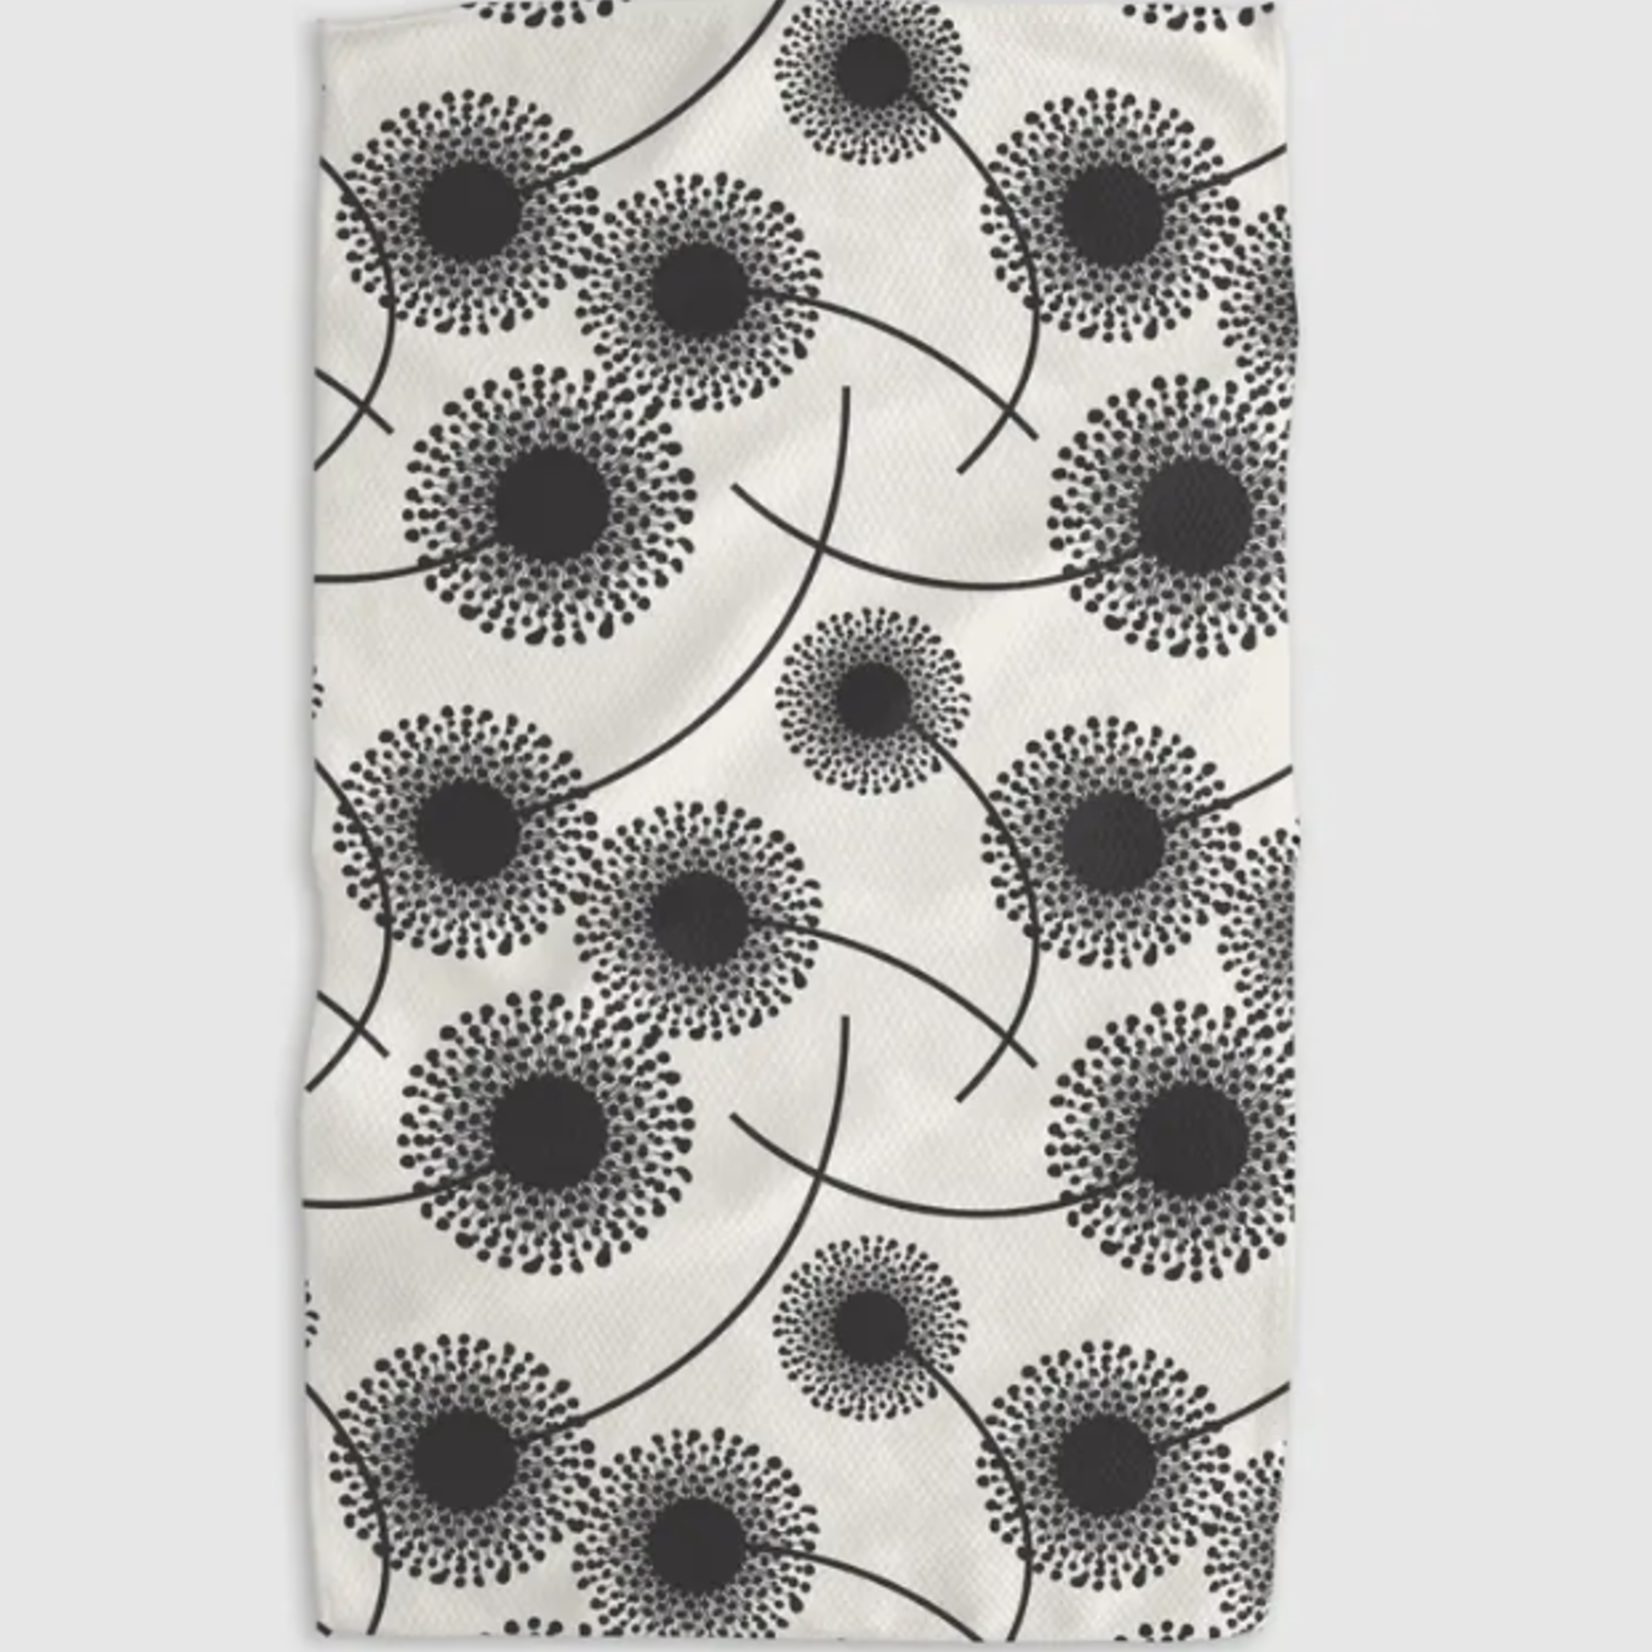 Lima Bean Geometry Fully Bloomed “Not  Paper Towel” Tea Towel